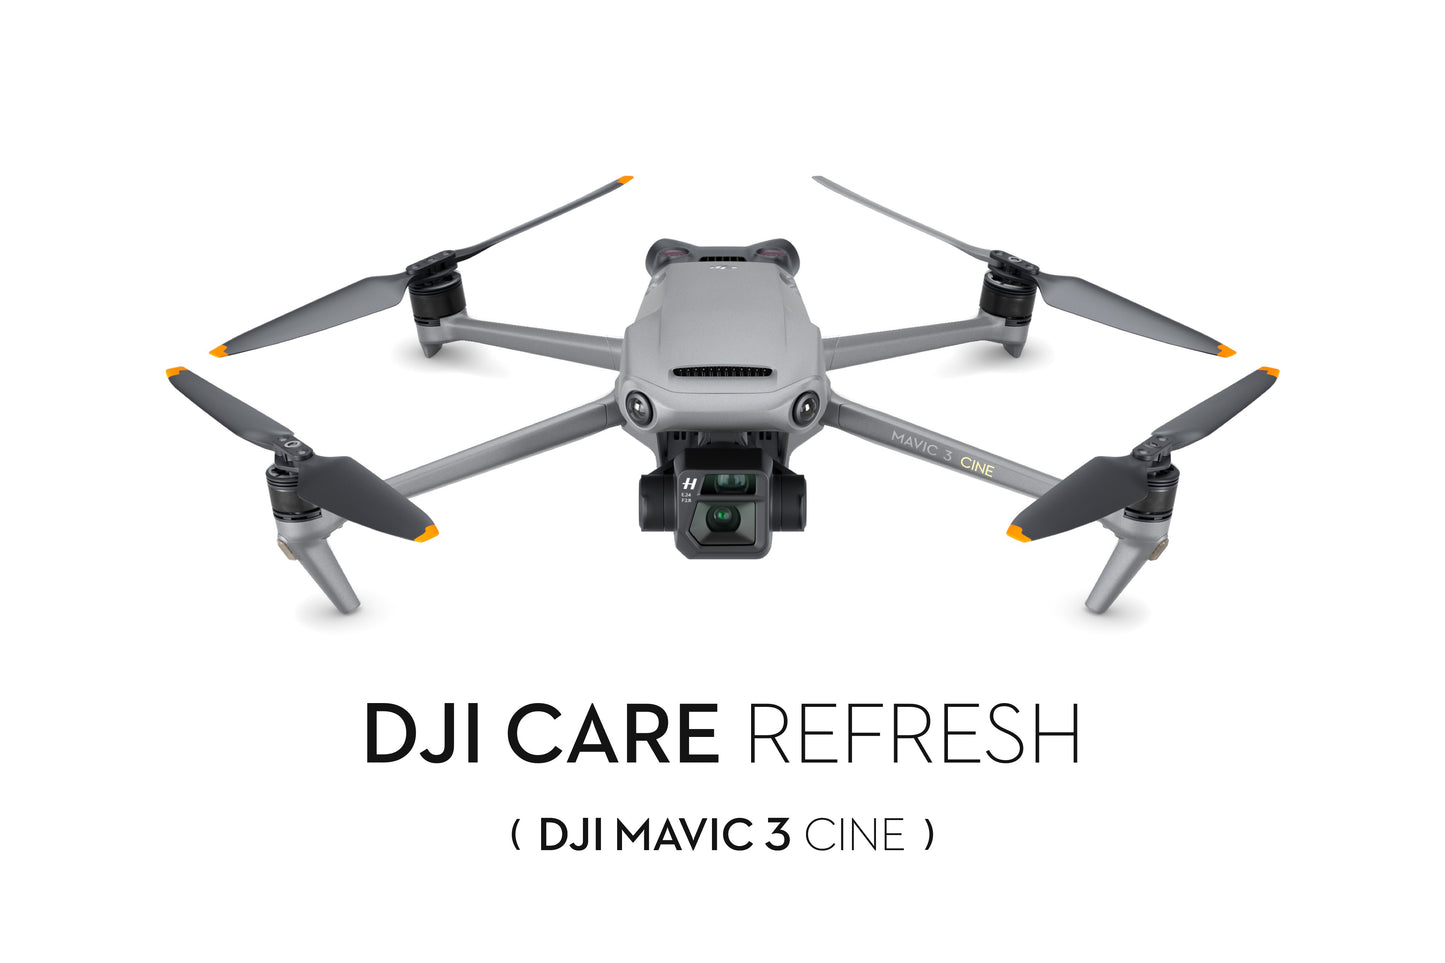 DJI Care Refresh for DJI Mavic 3 Cine